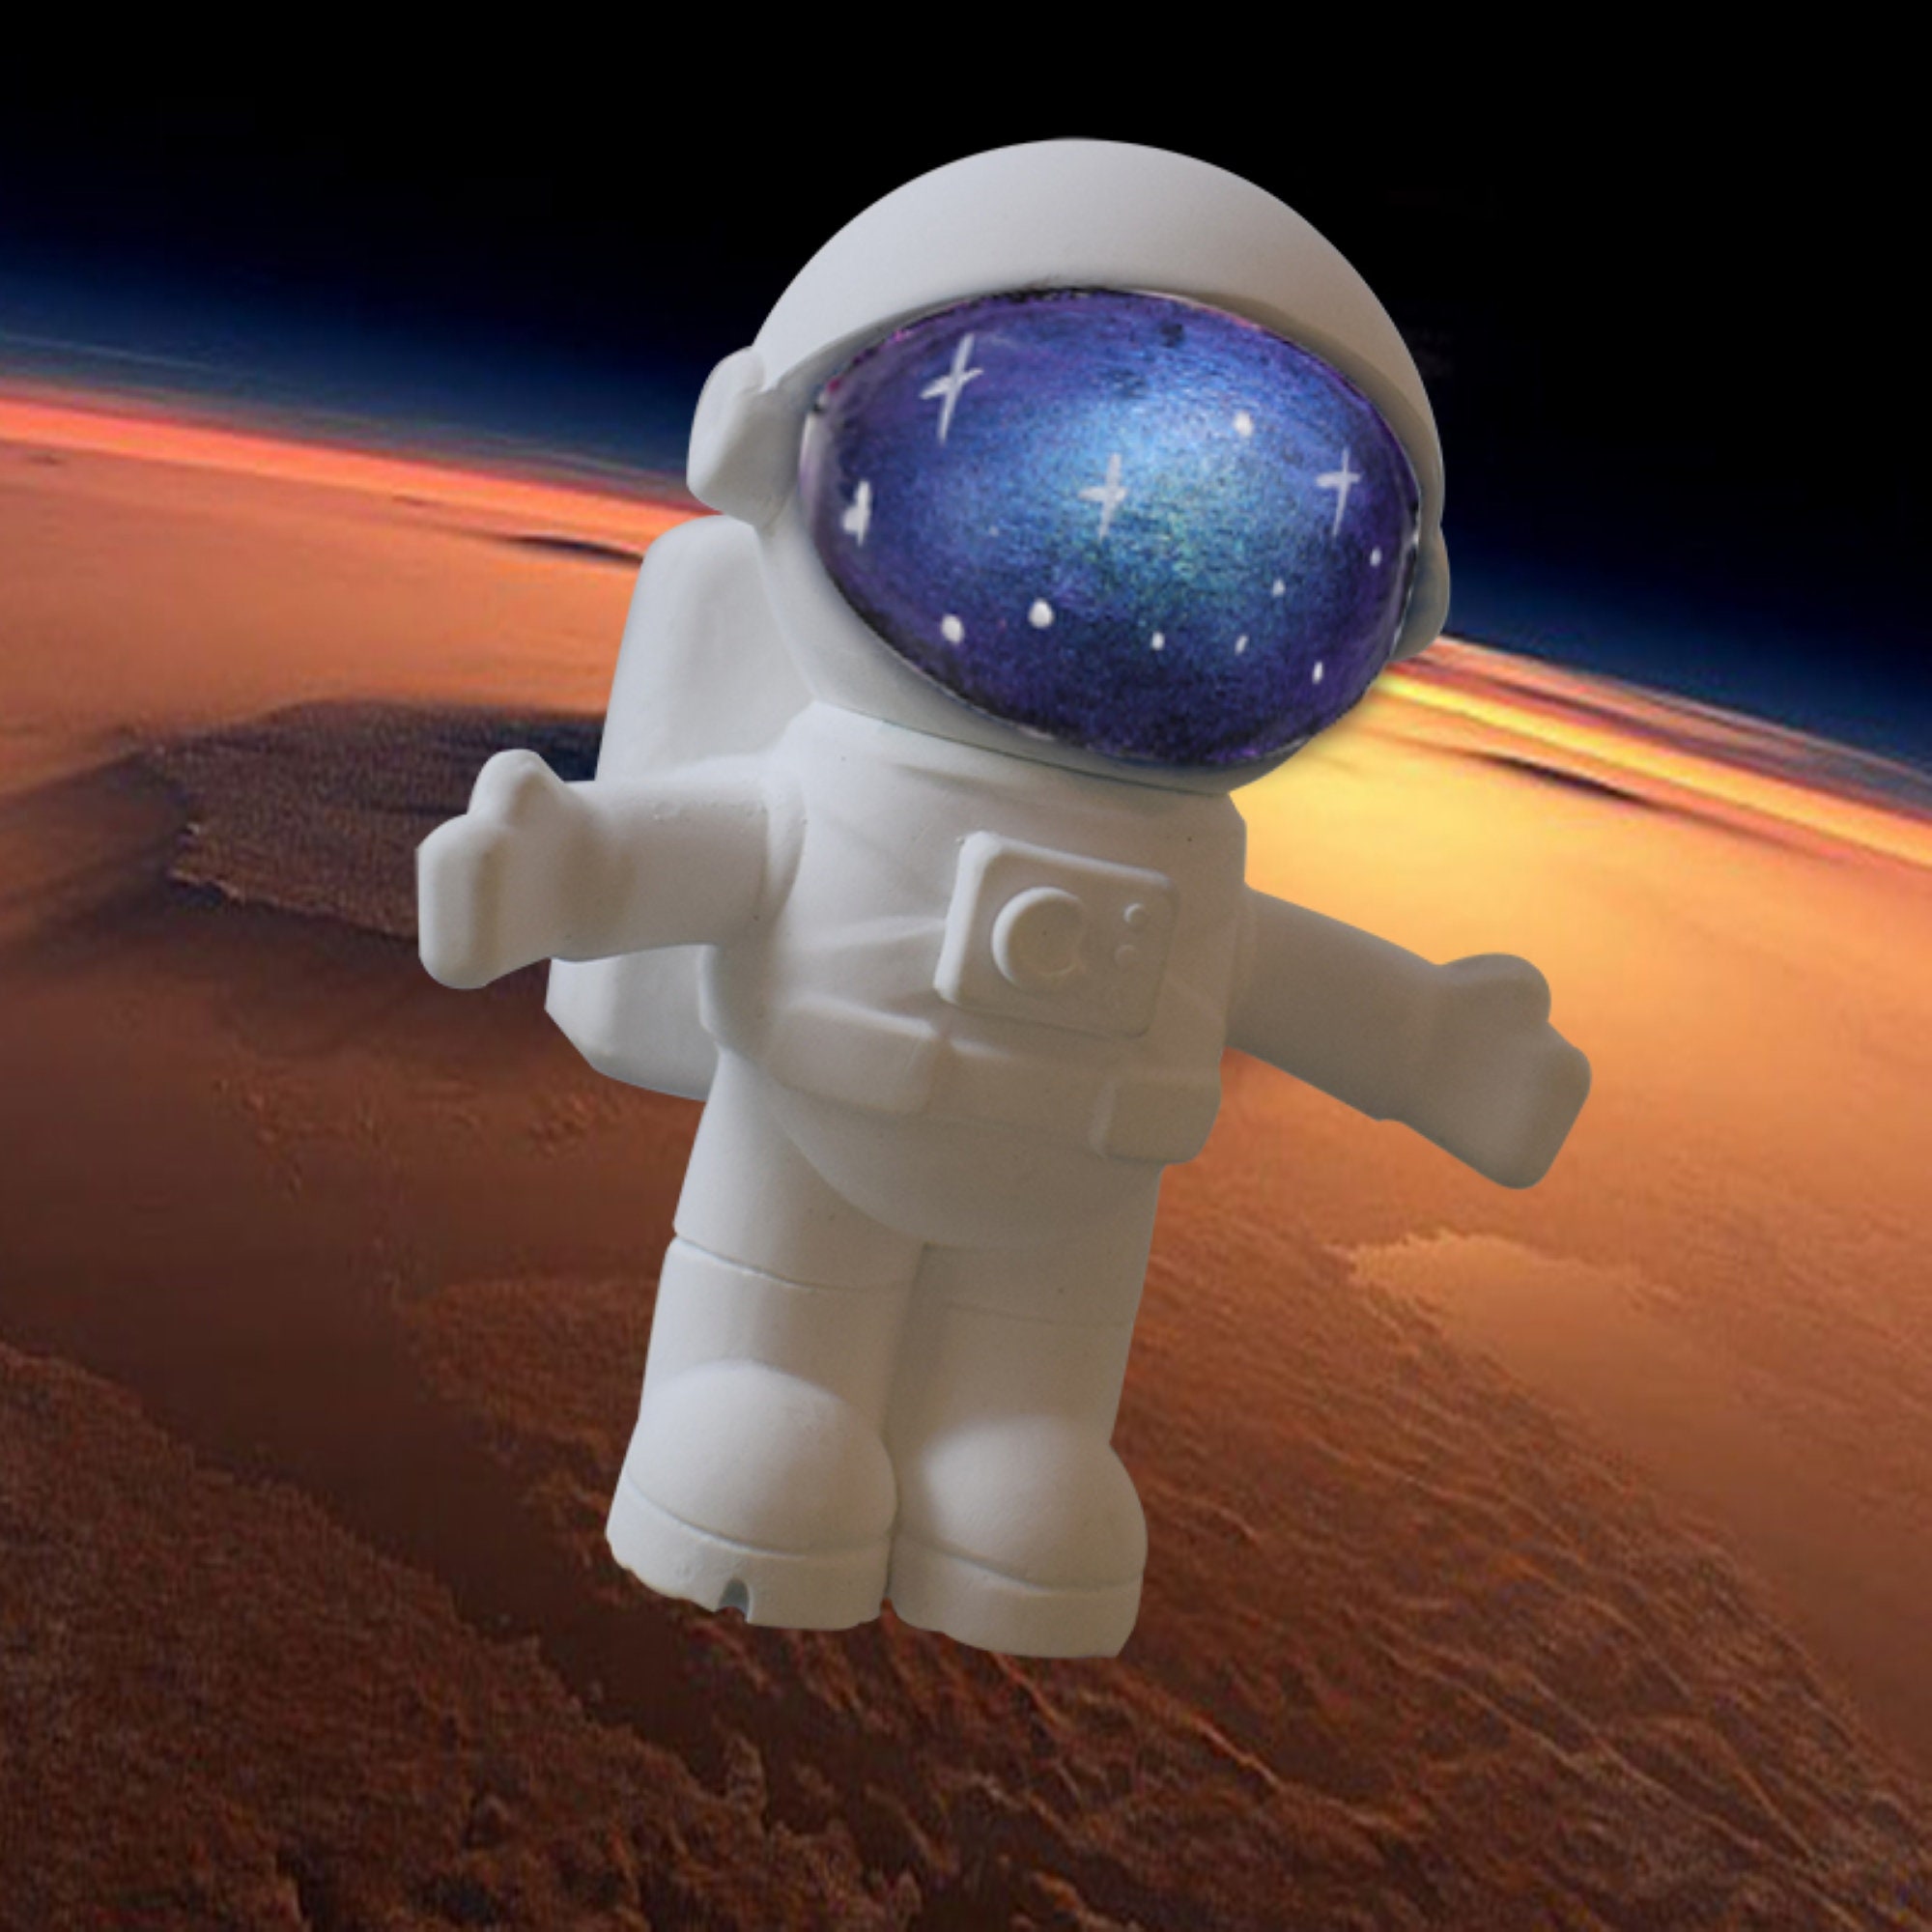  Voyyphixa 3D Astronaut Ice Cube Mold, Silicone Mold